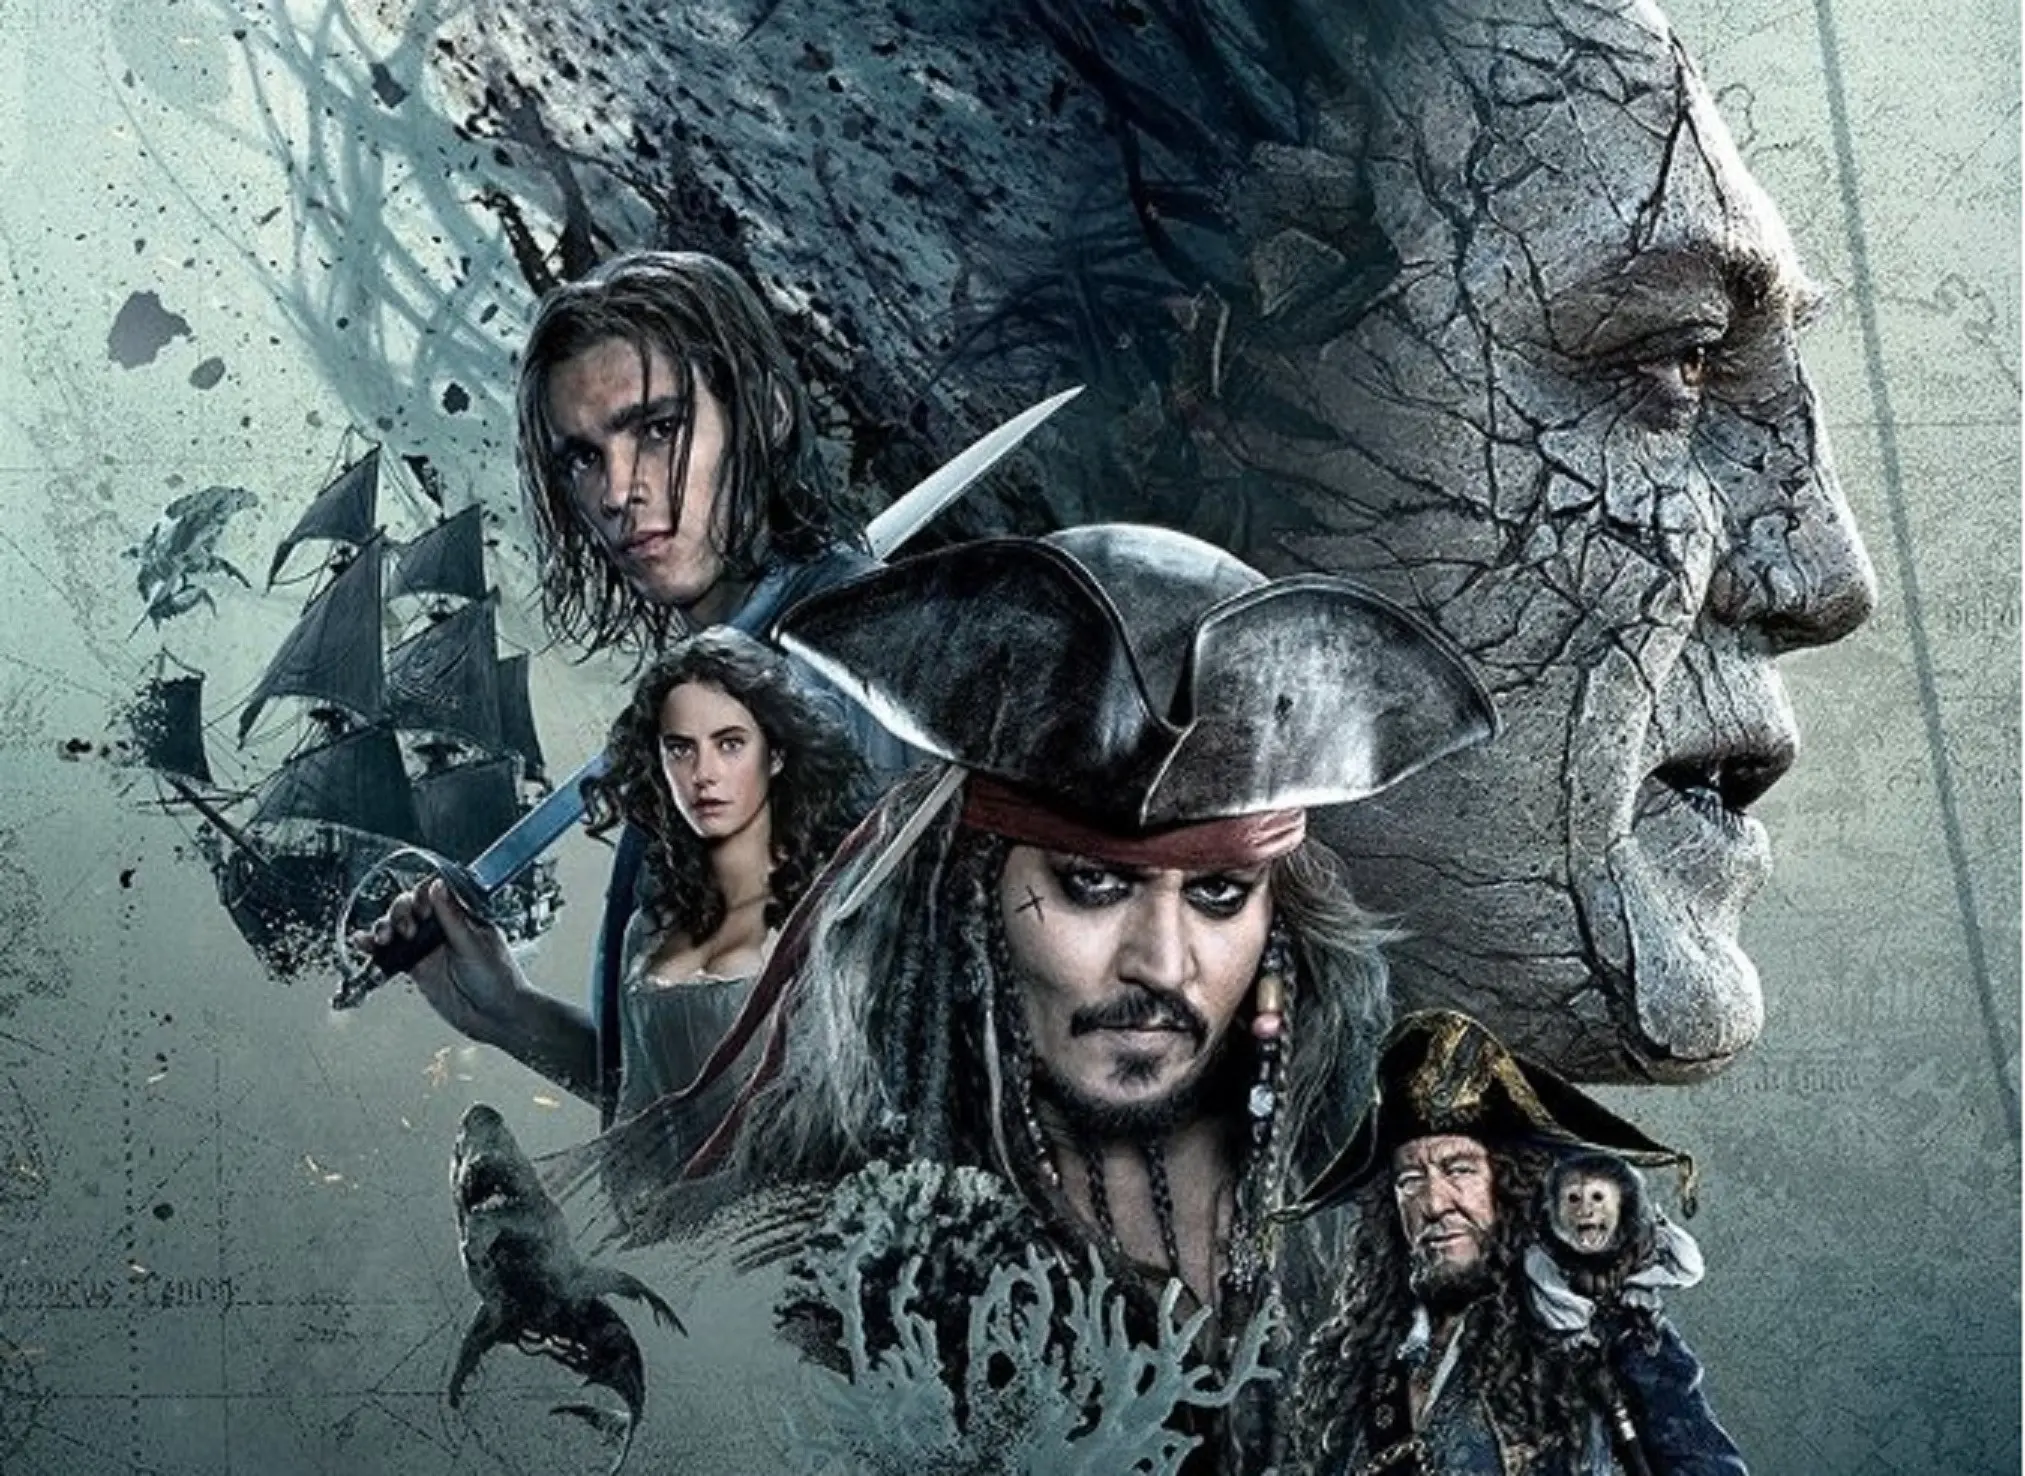 Pirates of the Caribbean: Dead Men Tell No Tales (IMDb)